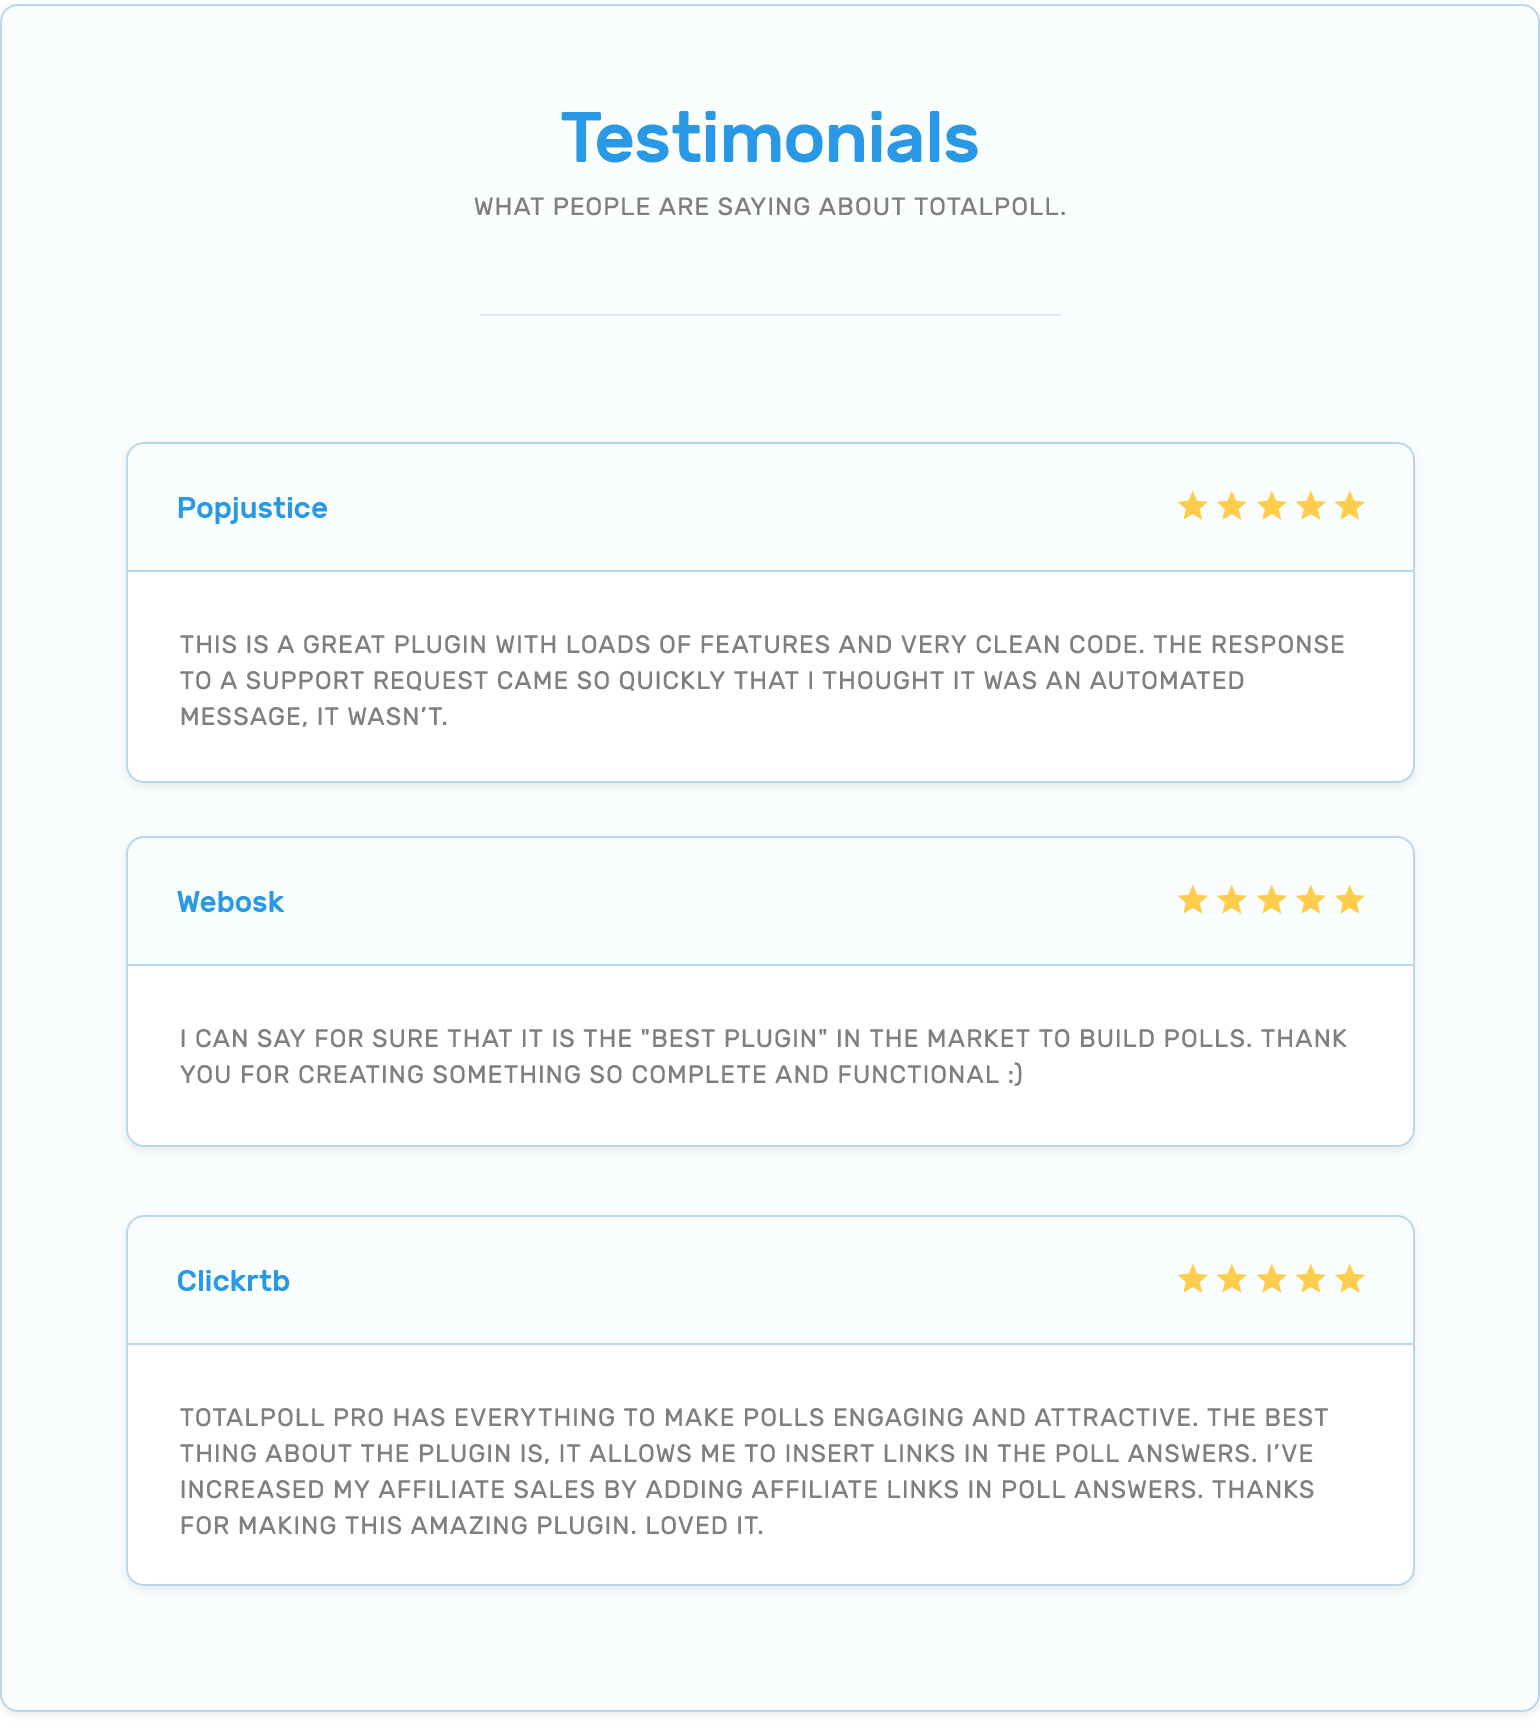 Testimonials of customers who used TotalPoll.